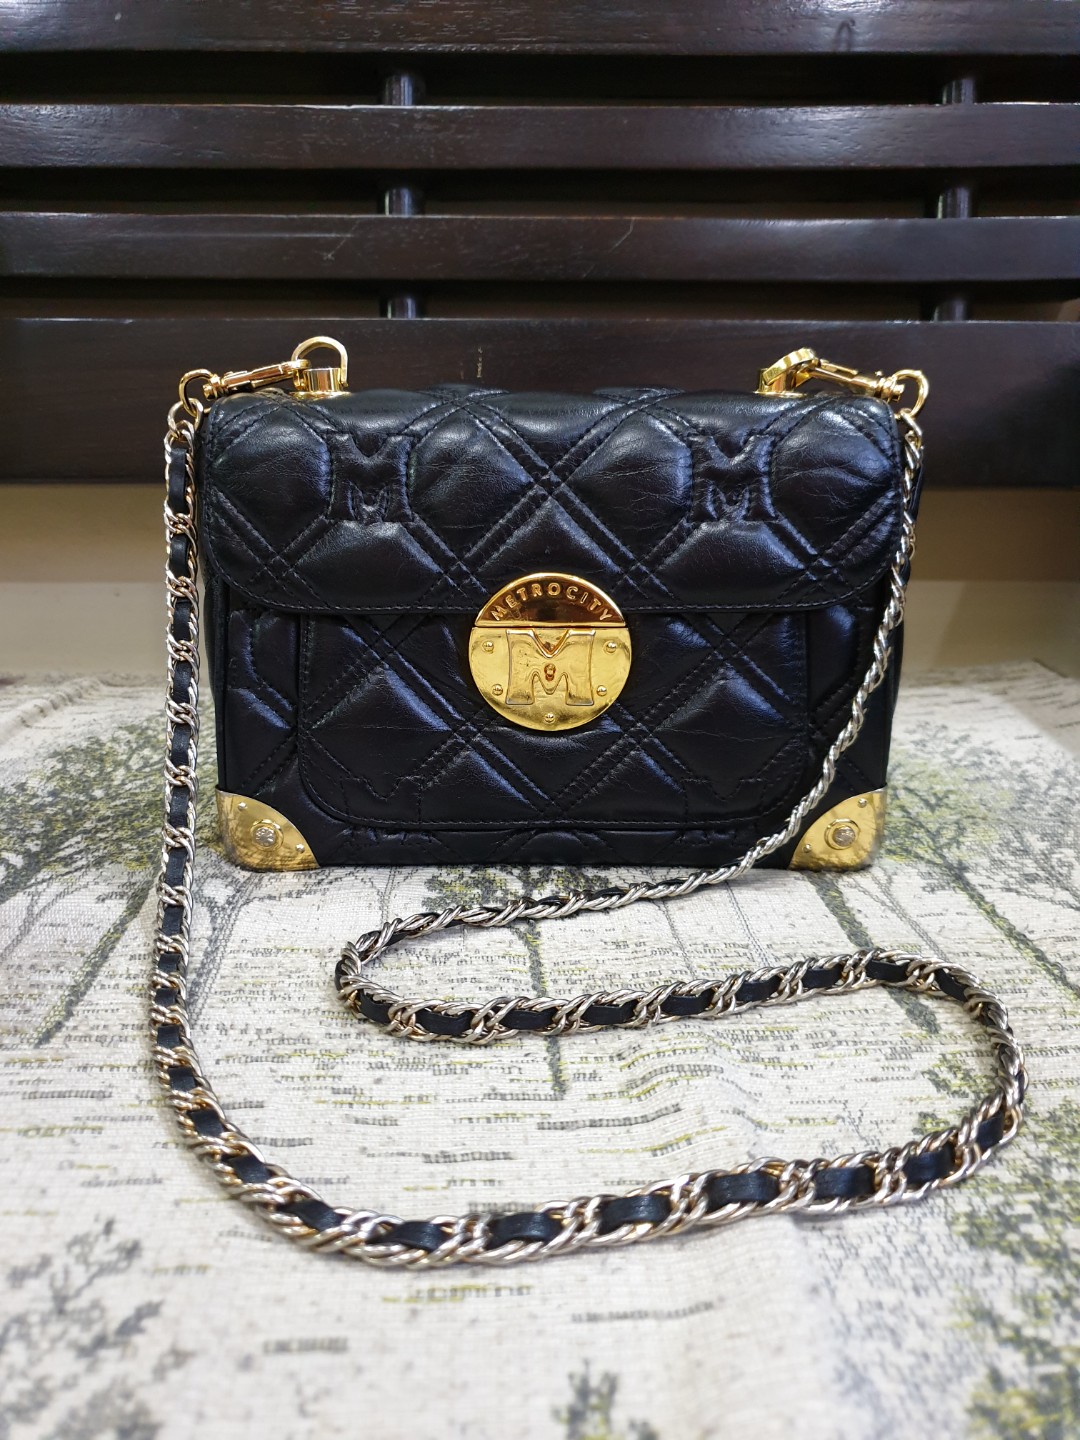 Metrocity Sling Bag, Luxury, Bags & Wallets on Carousell